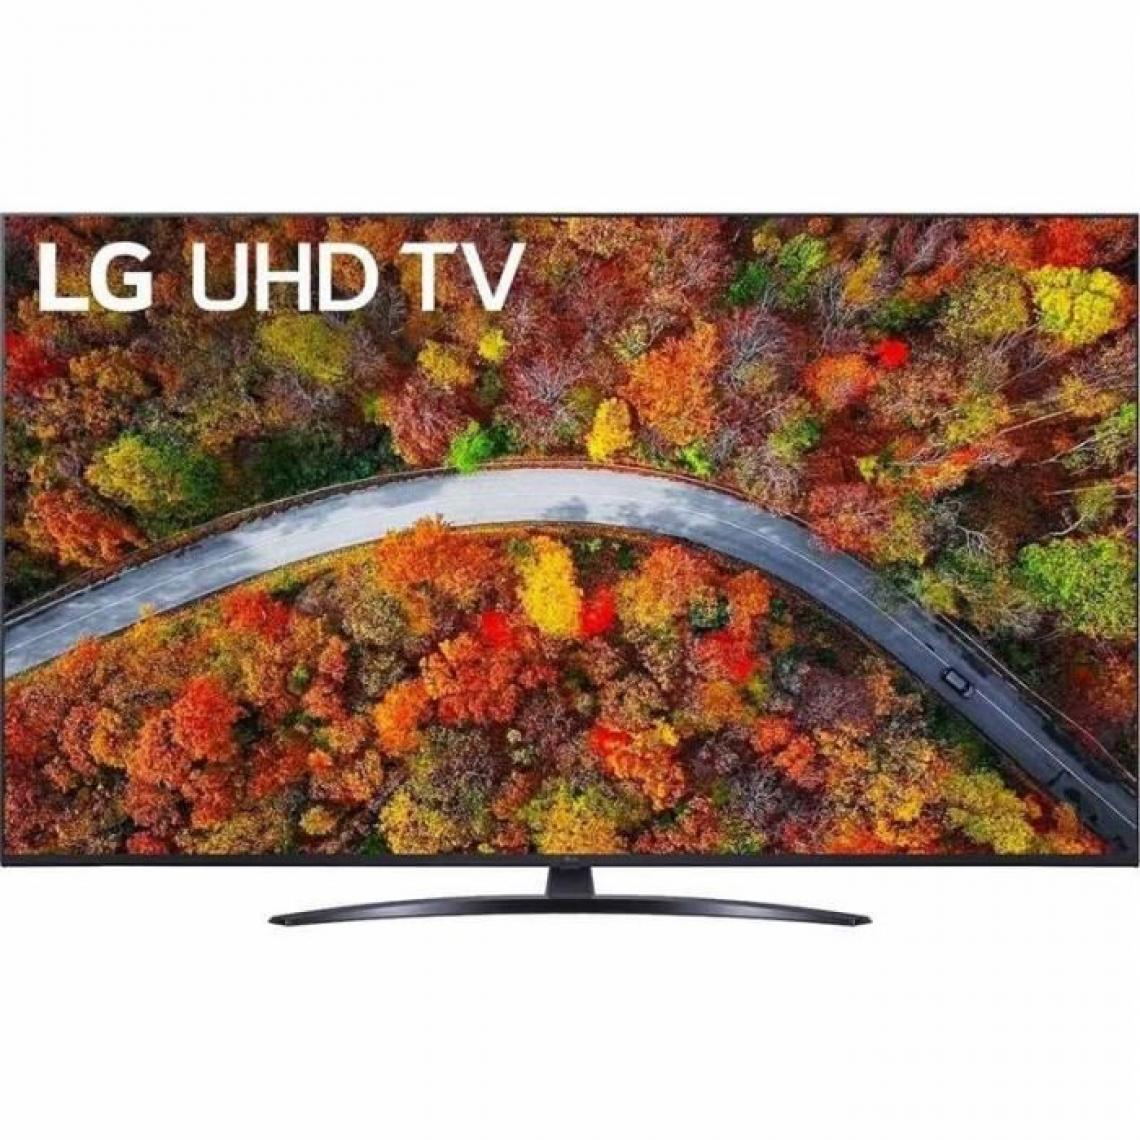 LG - LG 50UP8100 - TV LED UHD 4K 50 (126 cm) - Smart TV - 3xHDMI, 2xUSB - Noir - TV 50'' à 55''